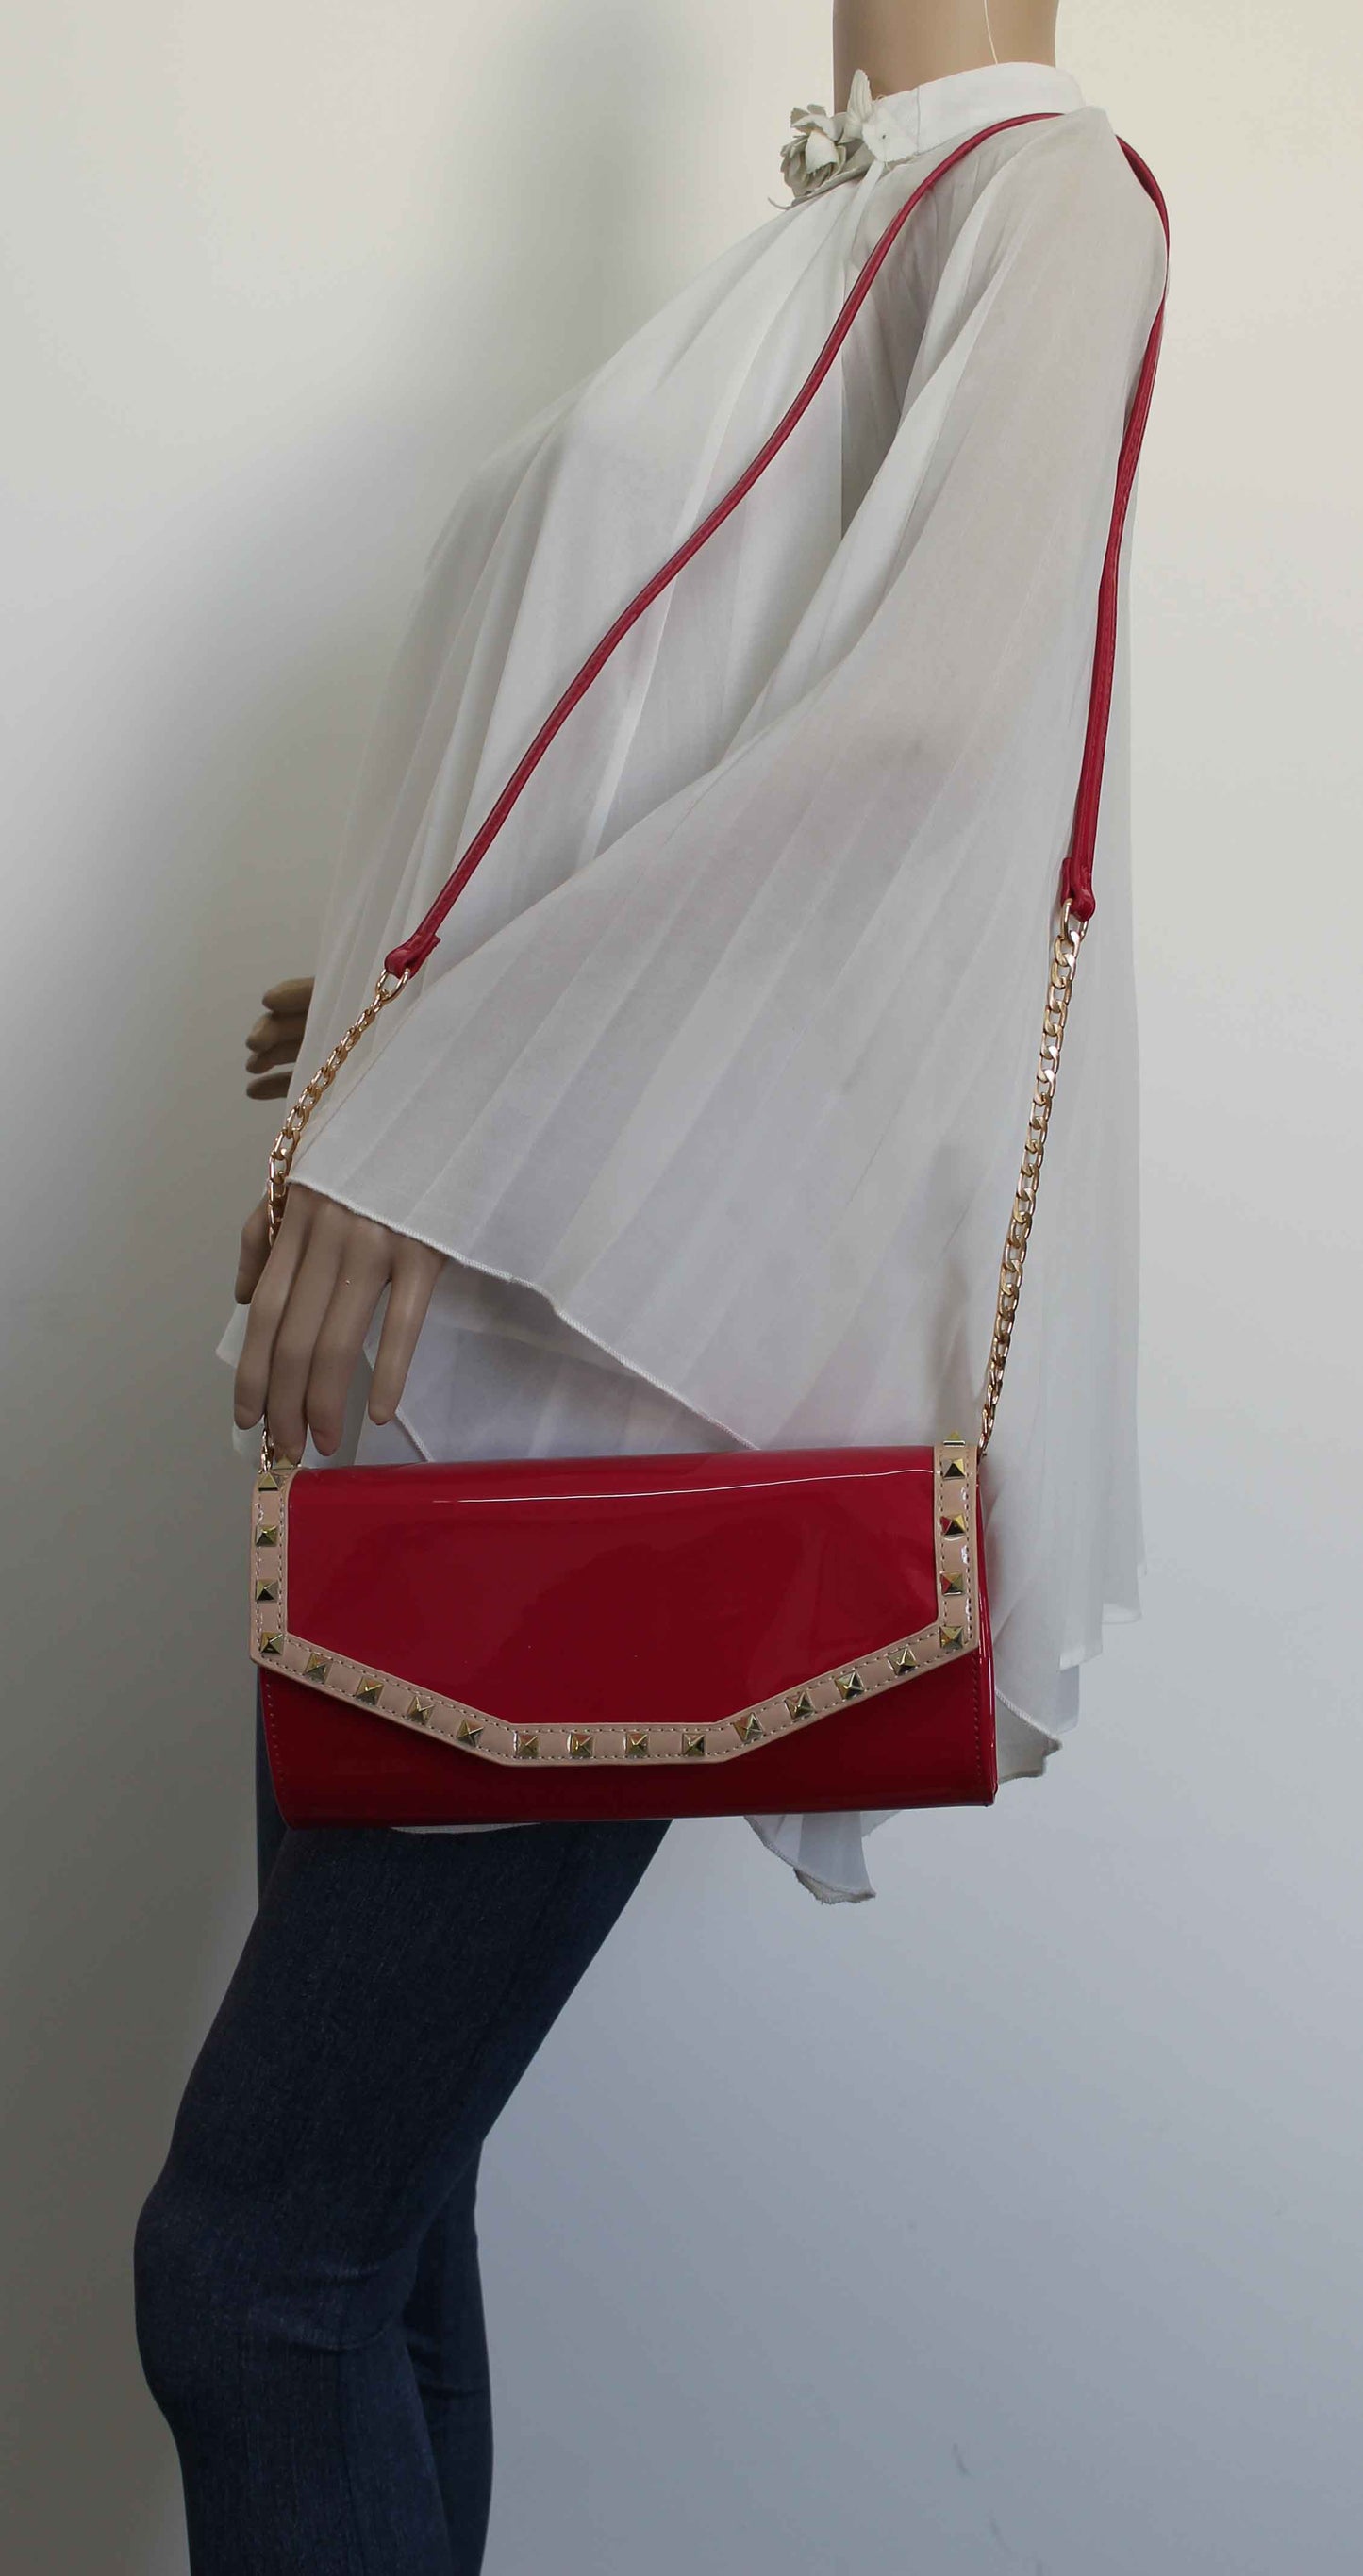 SWANKYSWANS Juno Clutch Bag Fuschia Cute Cheap Clutch Bag For Weddings School and Work